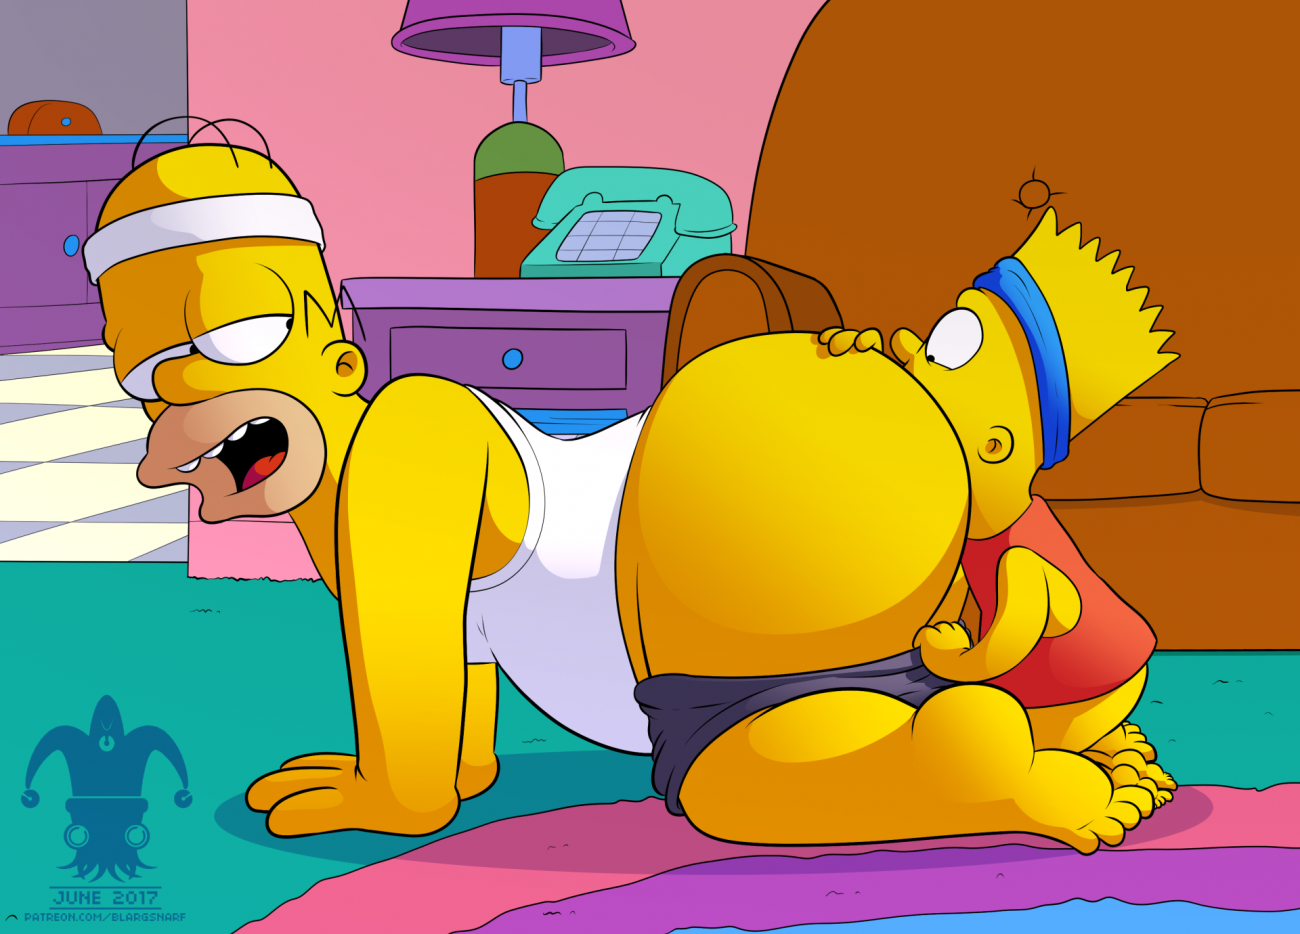 2263470 - Bart_Simpson Homer_Simpson The_Simpsons blargsnarf.png.